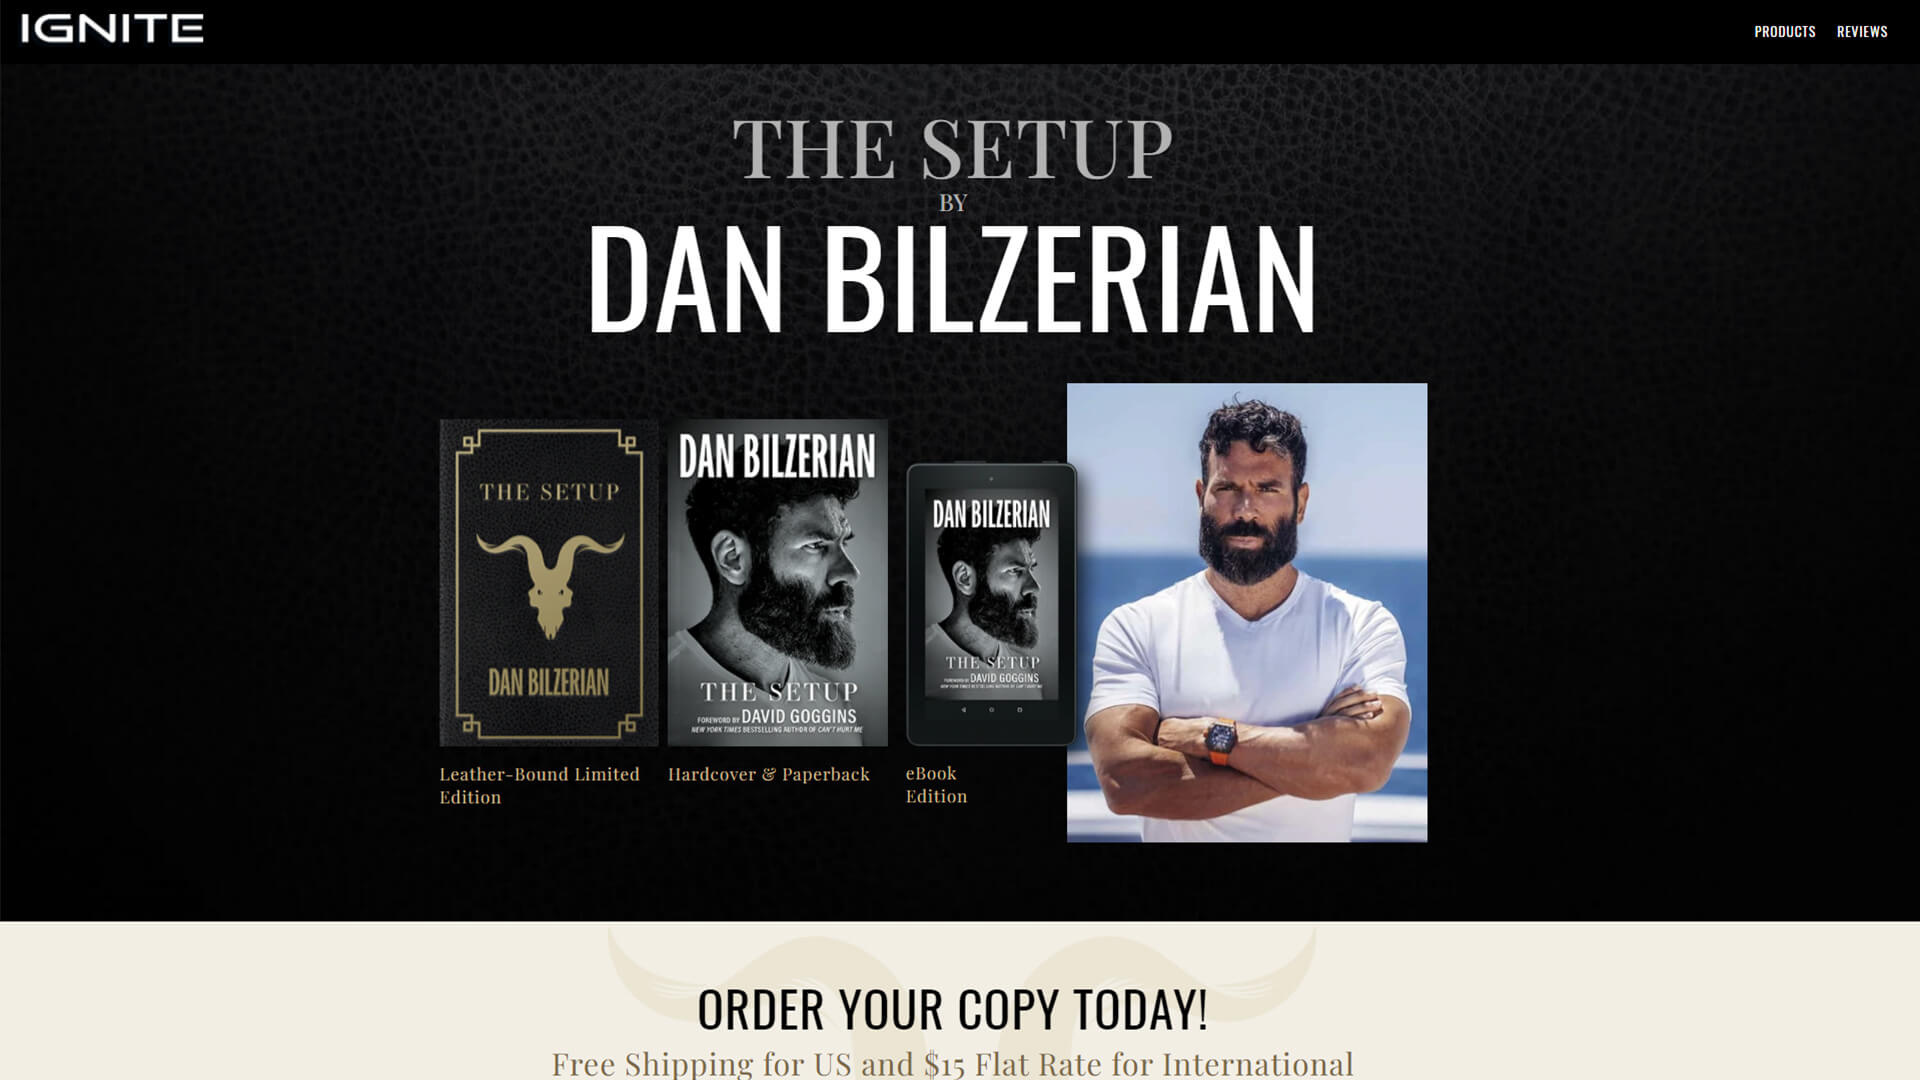 Dan Bilzerian - The Setup